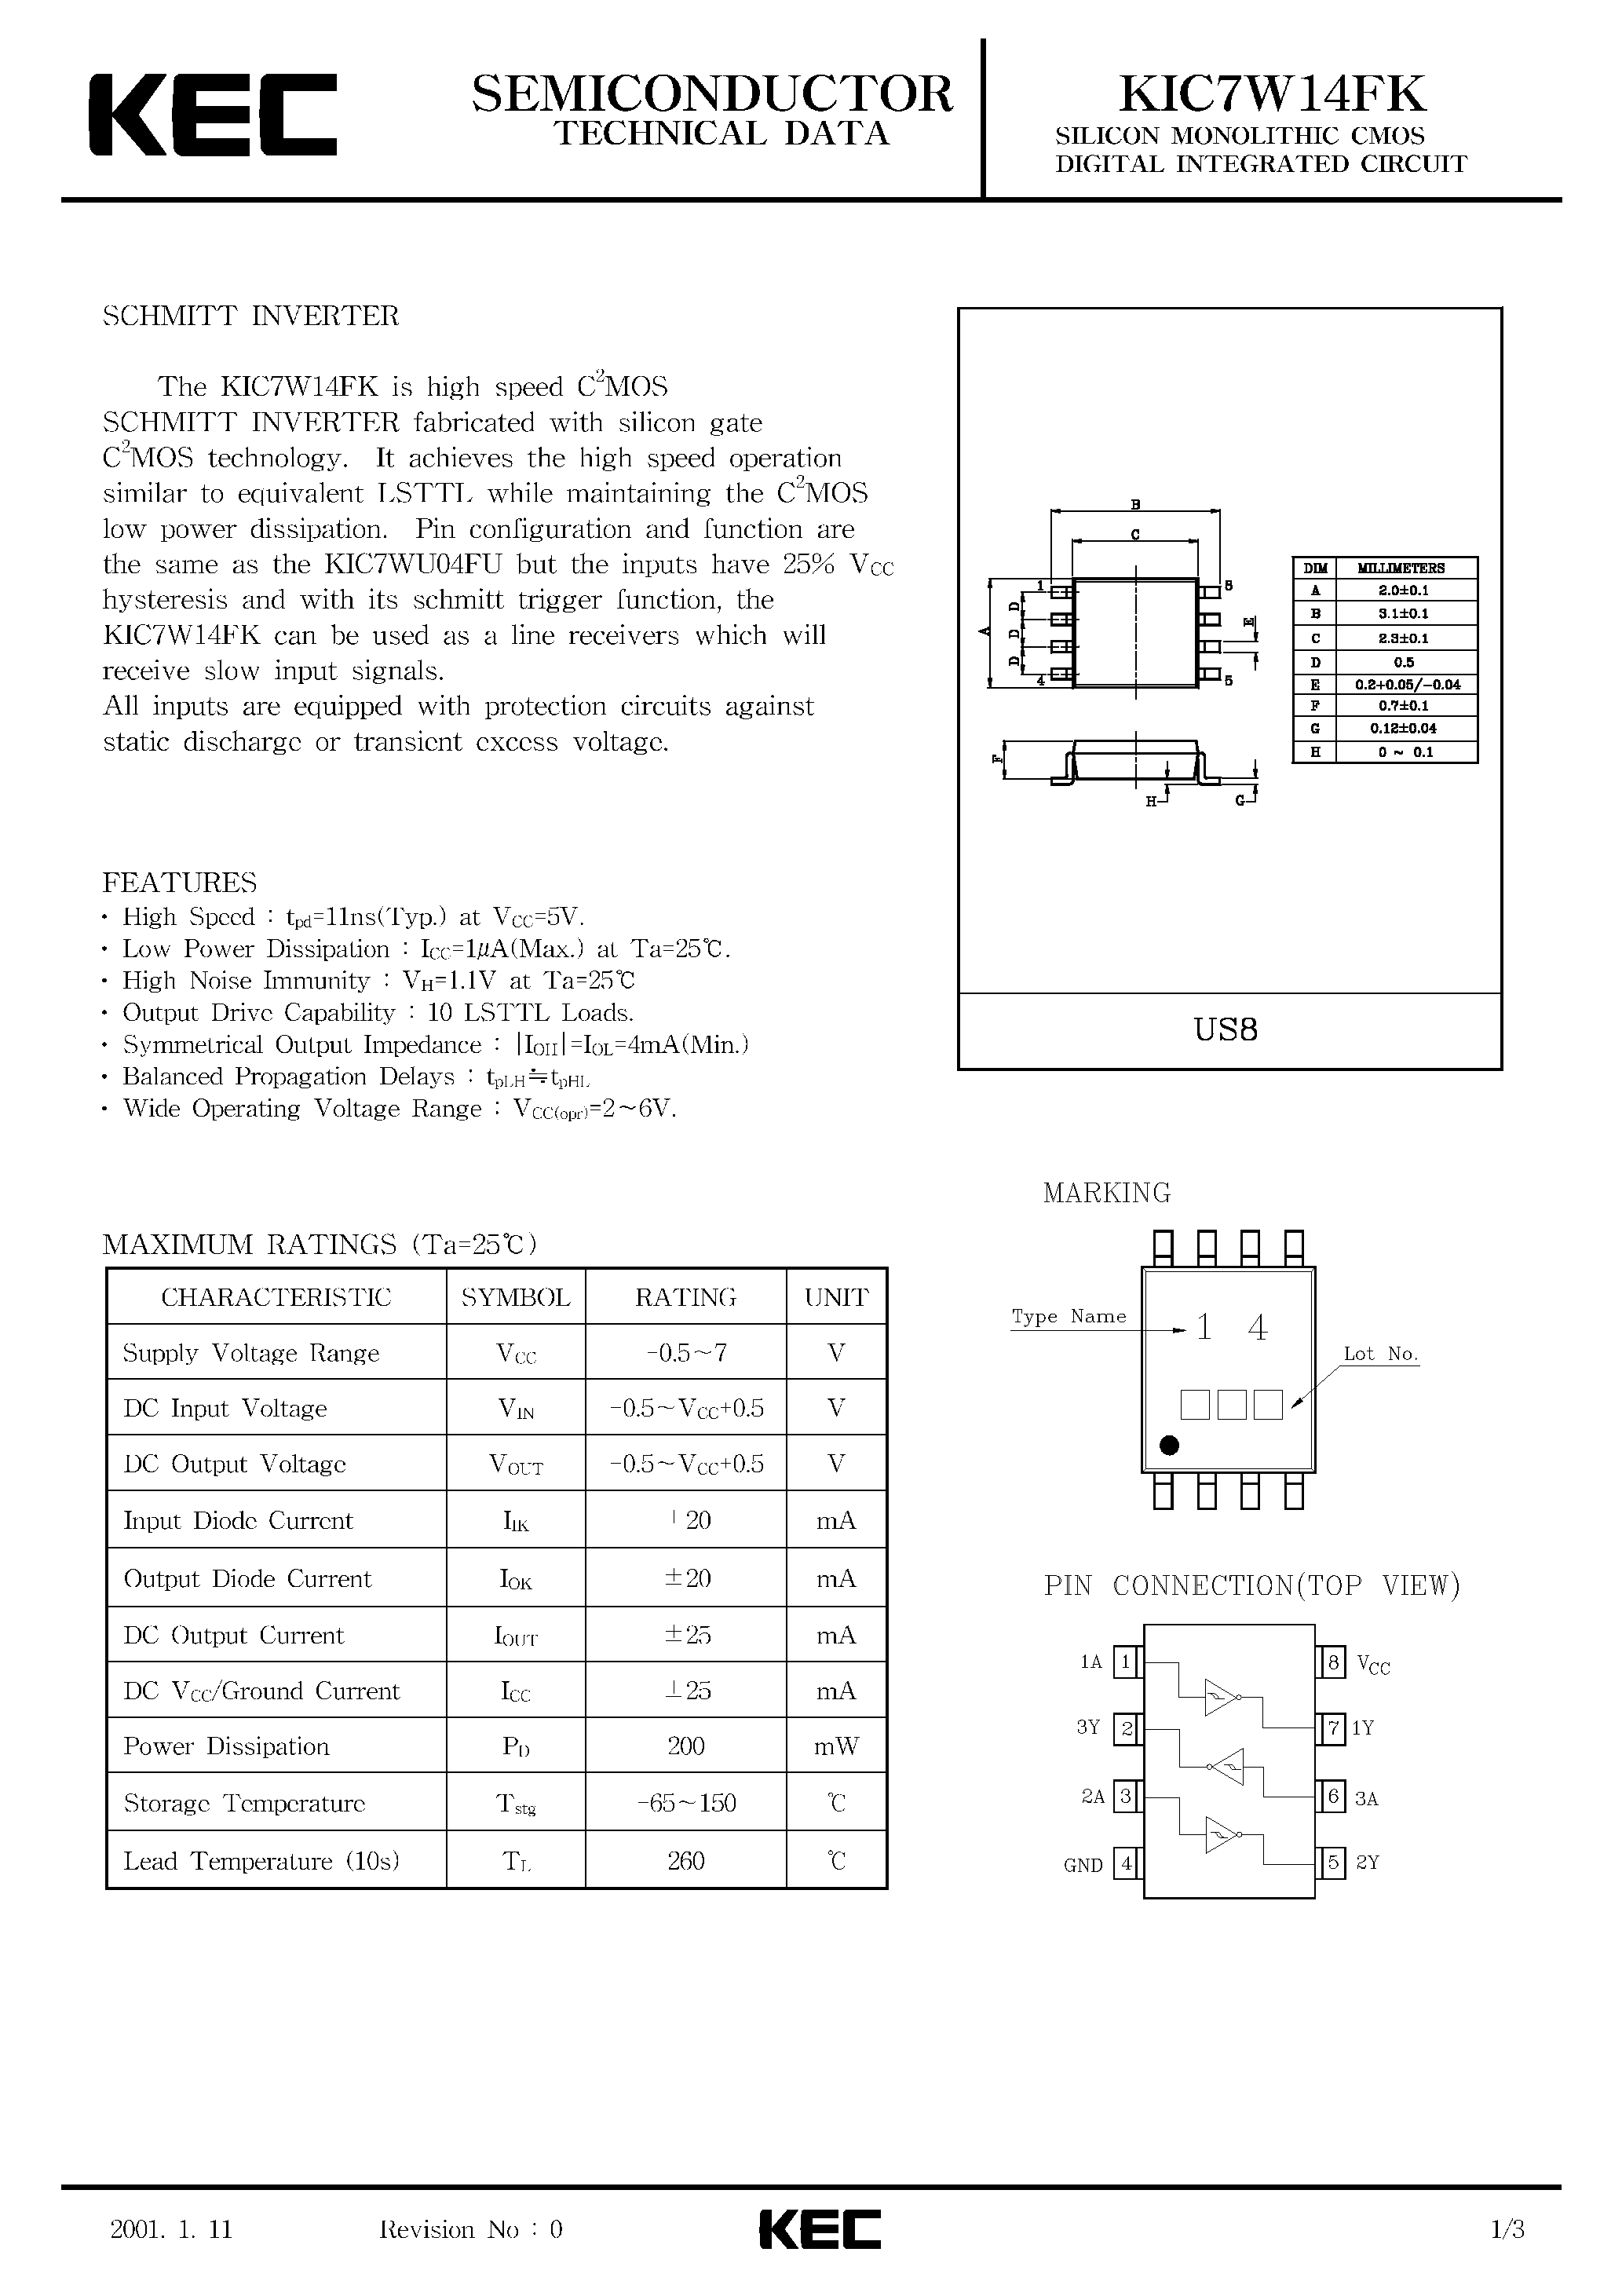 Даташит KIC714FK - SILICON MONOLITHIC CMOS DIGITAL INTEGRATED CIRCUIT (SCHMITT INVERTER) страница 1